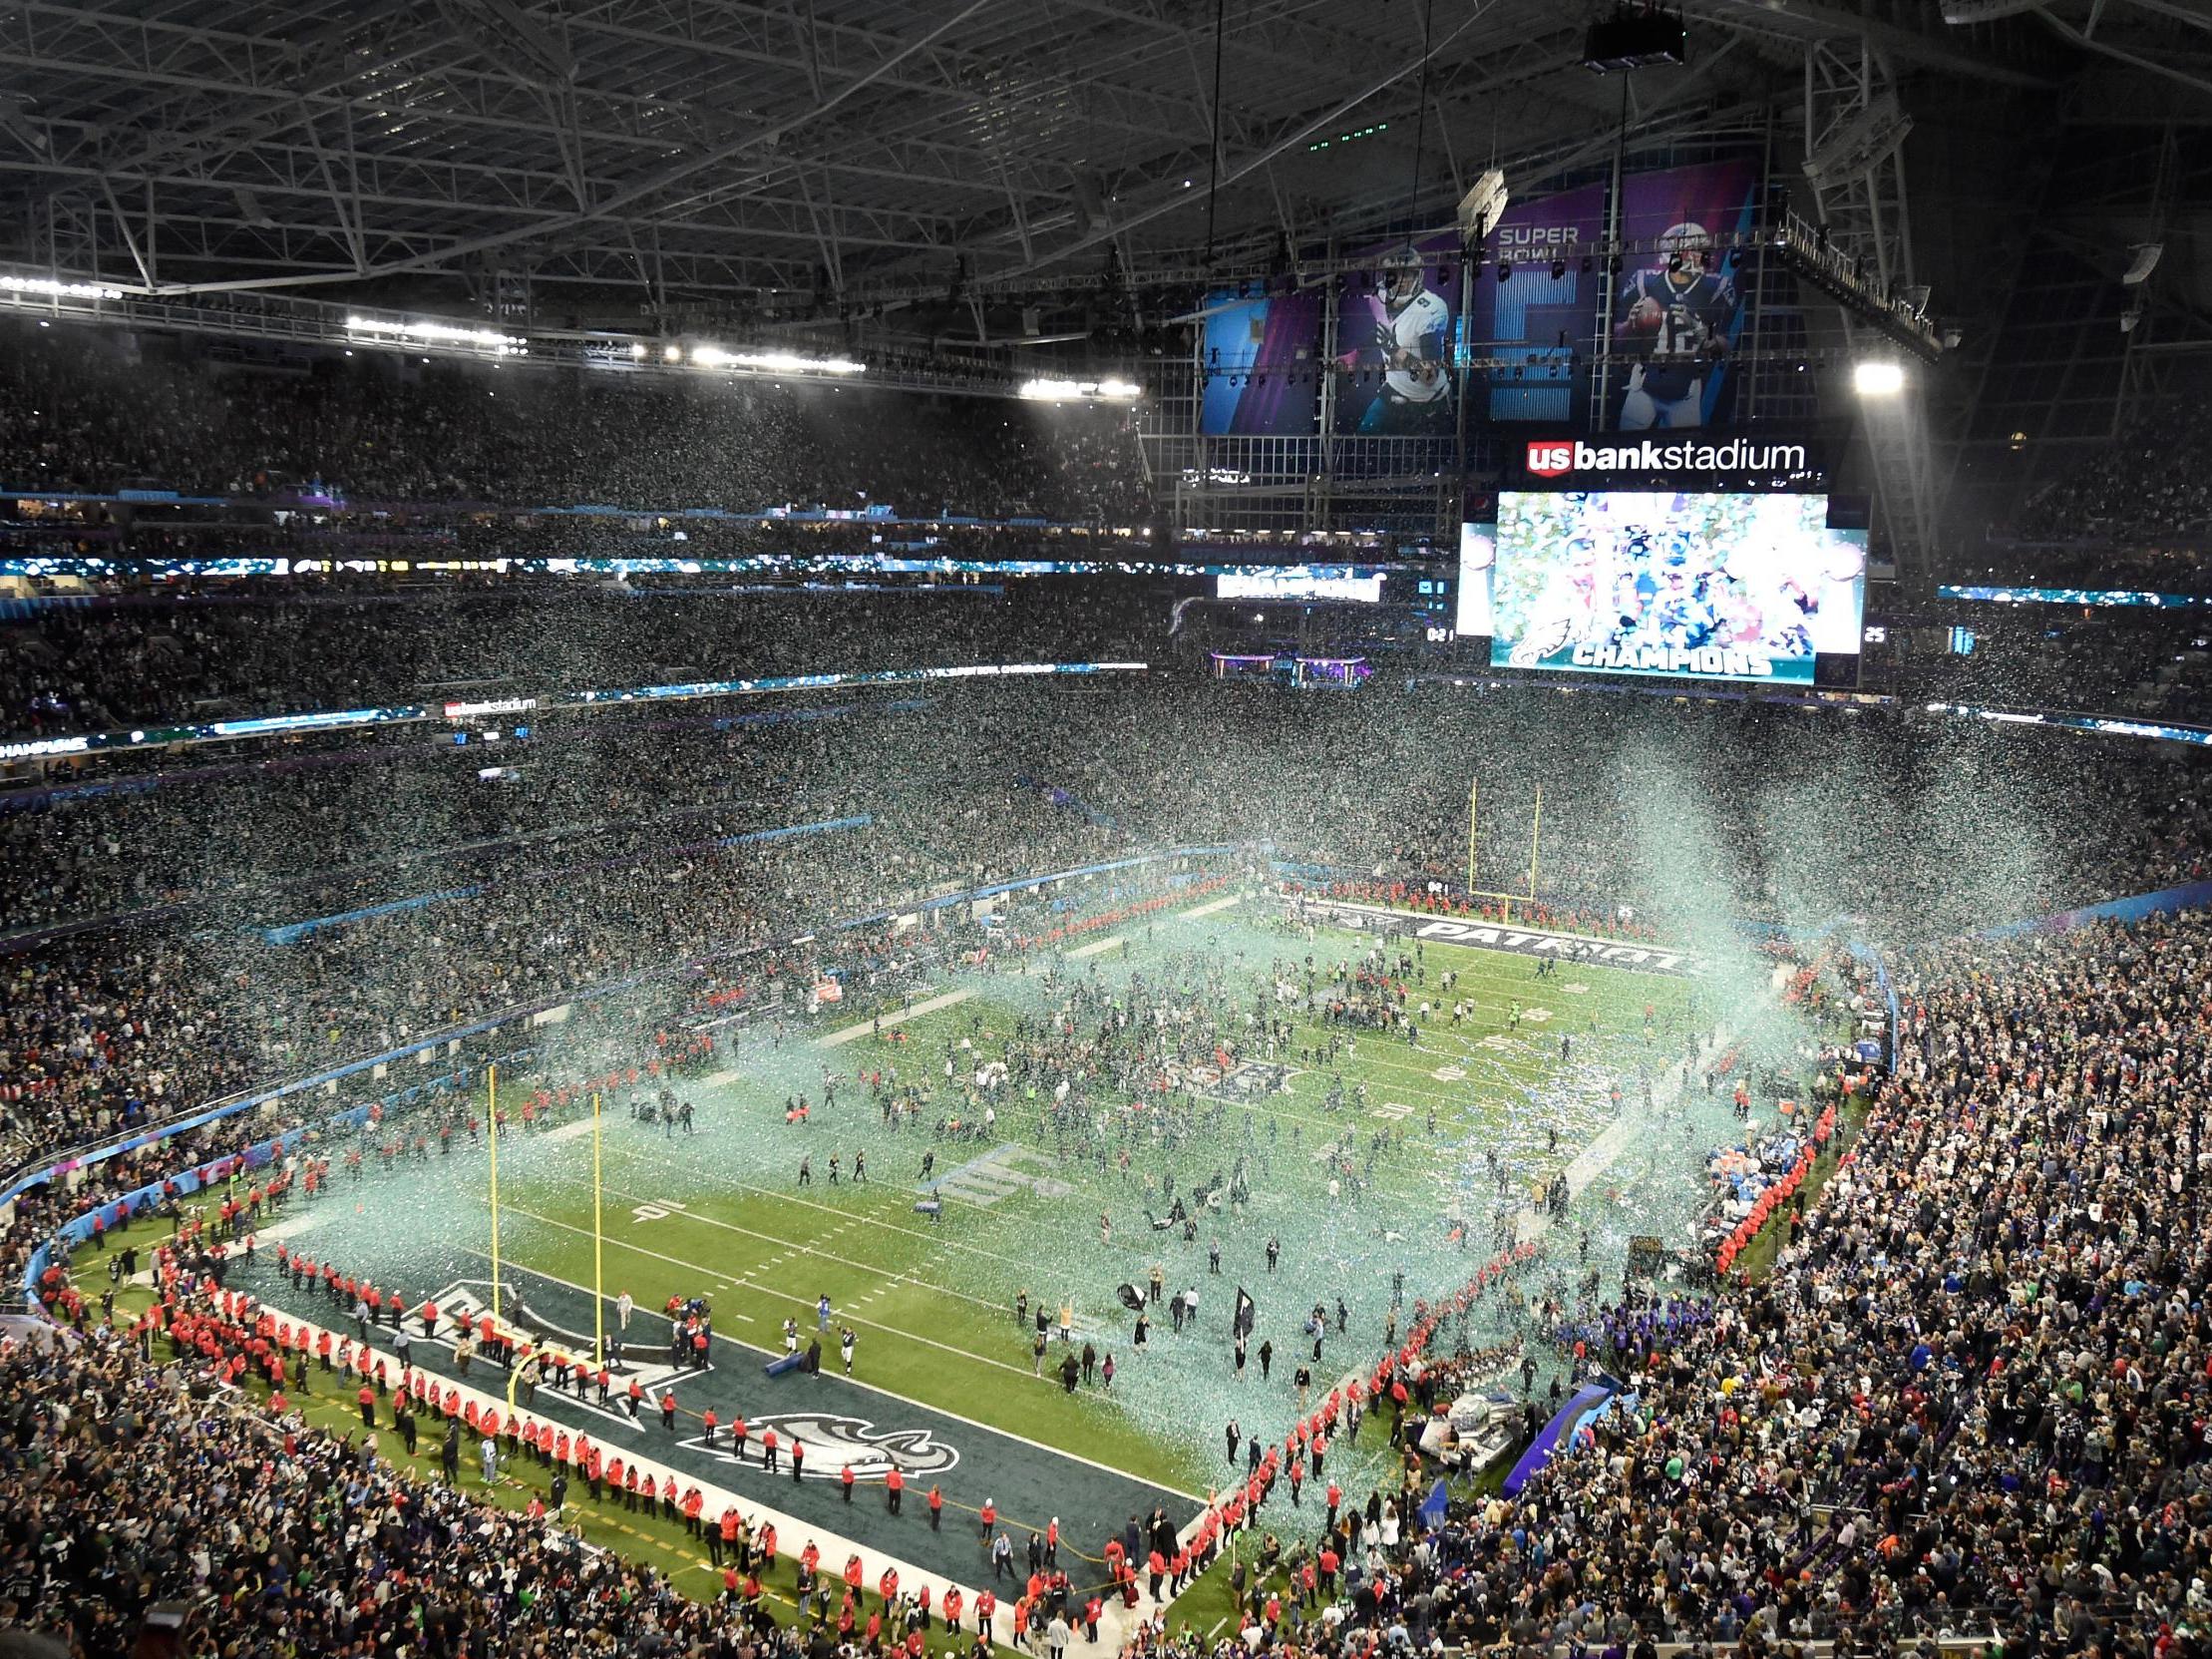 The Super Bowl will be held on 3 February in Atlanta, Georgia